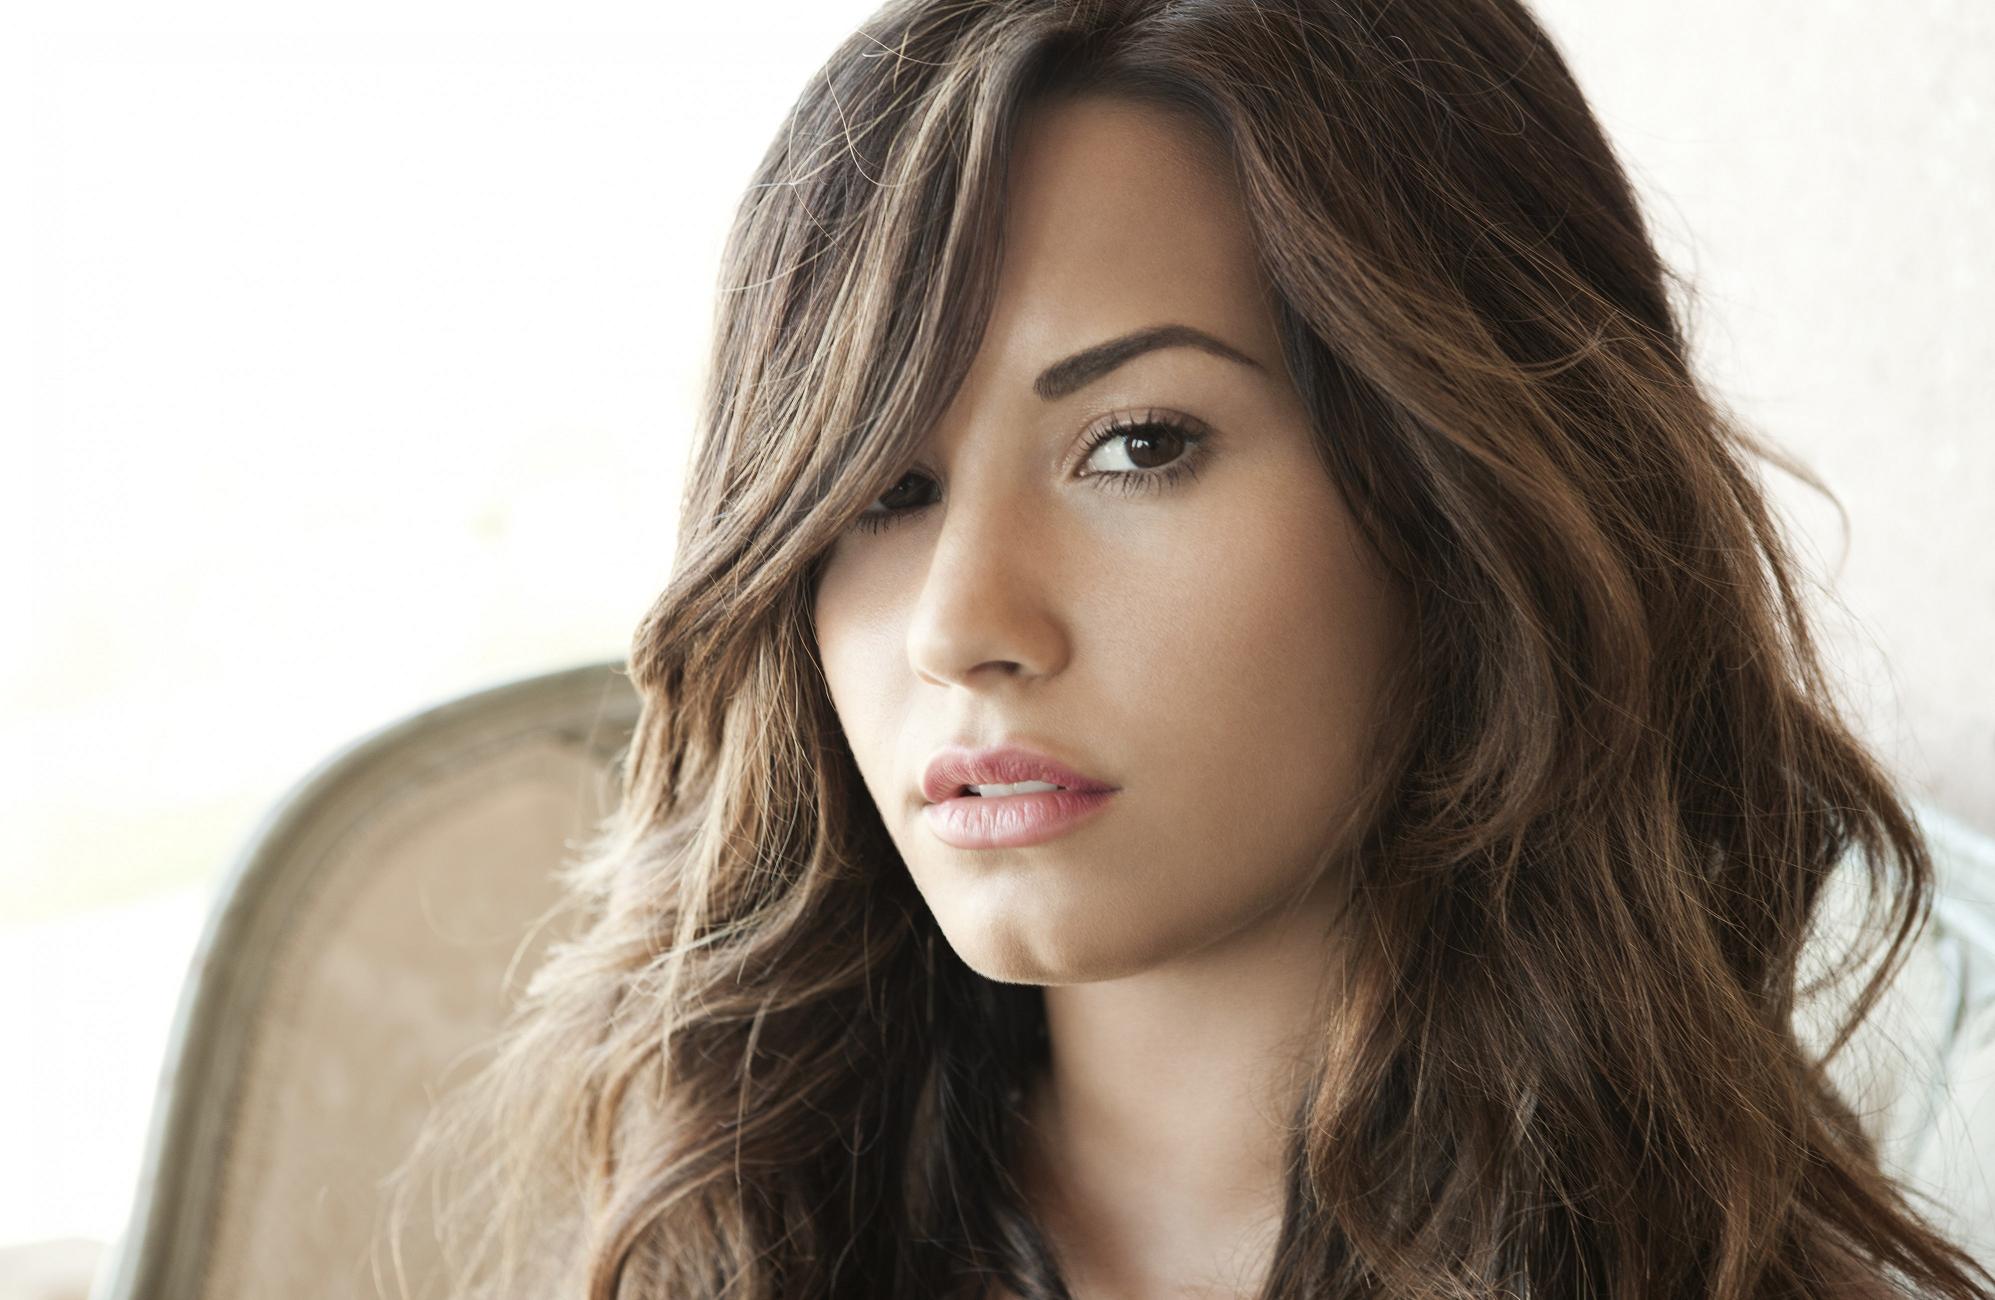 Demi Lovato photo 2501 of 4311 pics, wallpaper - photo #526542 - ThePlace2